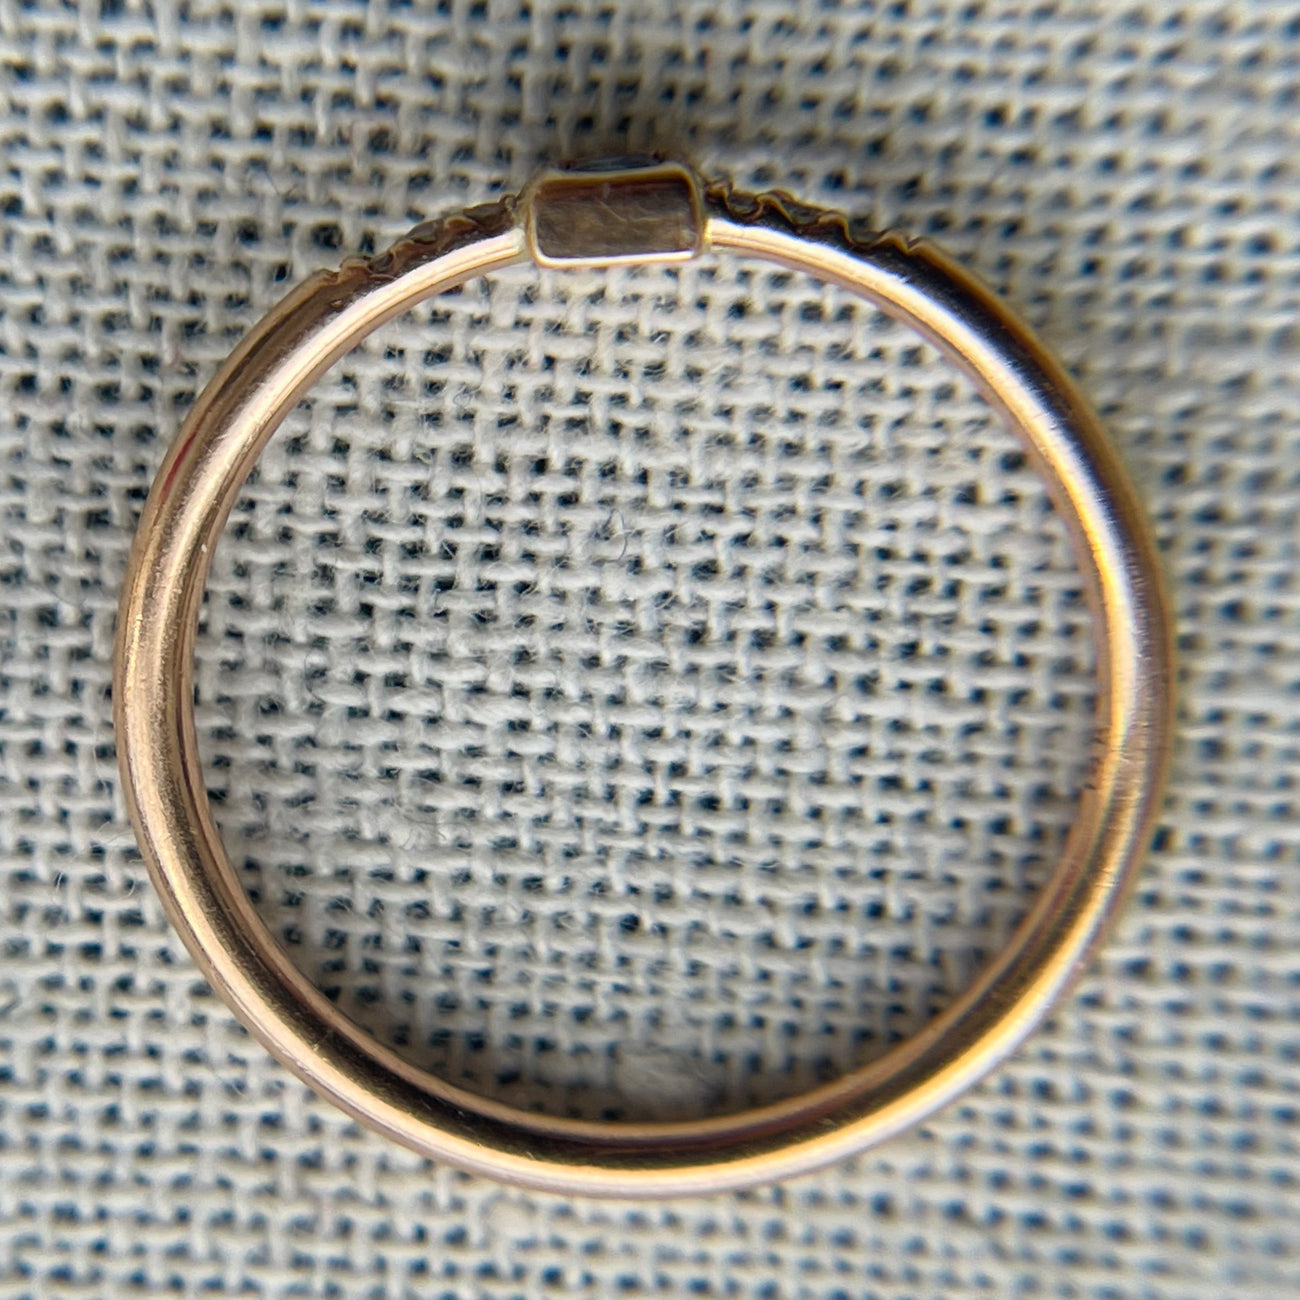 Rose Gold Sapphire Bezel Ring